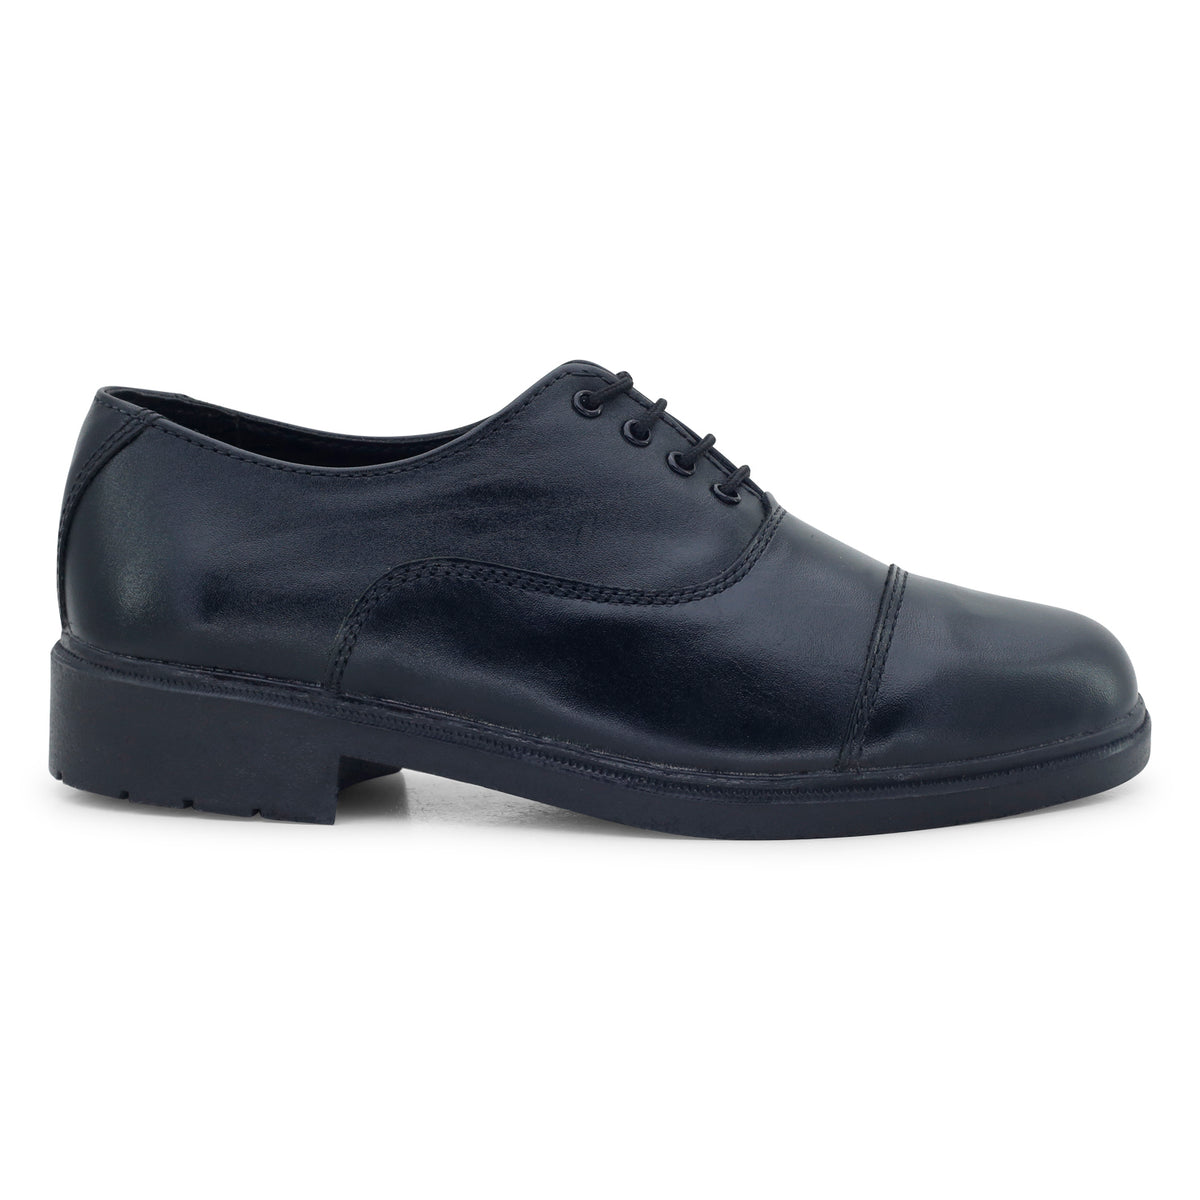 bata men's formal shoes online shopping